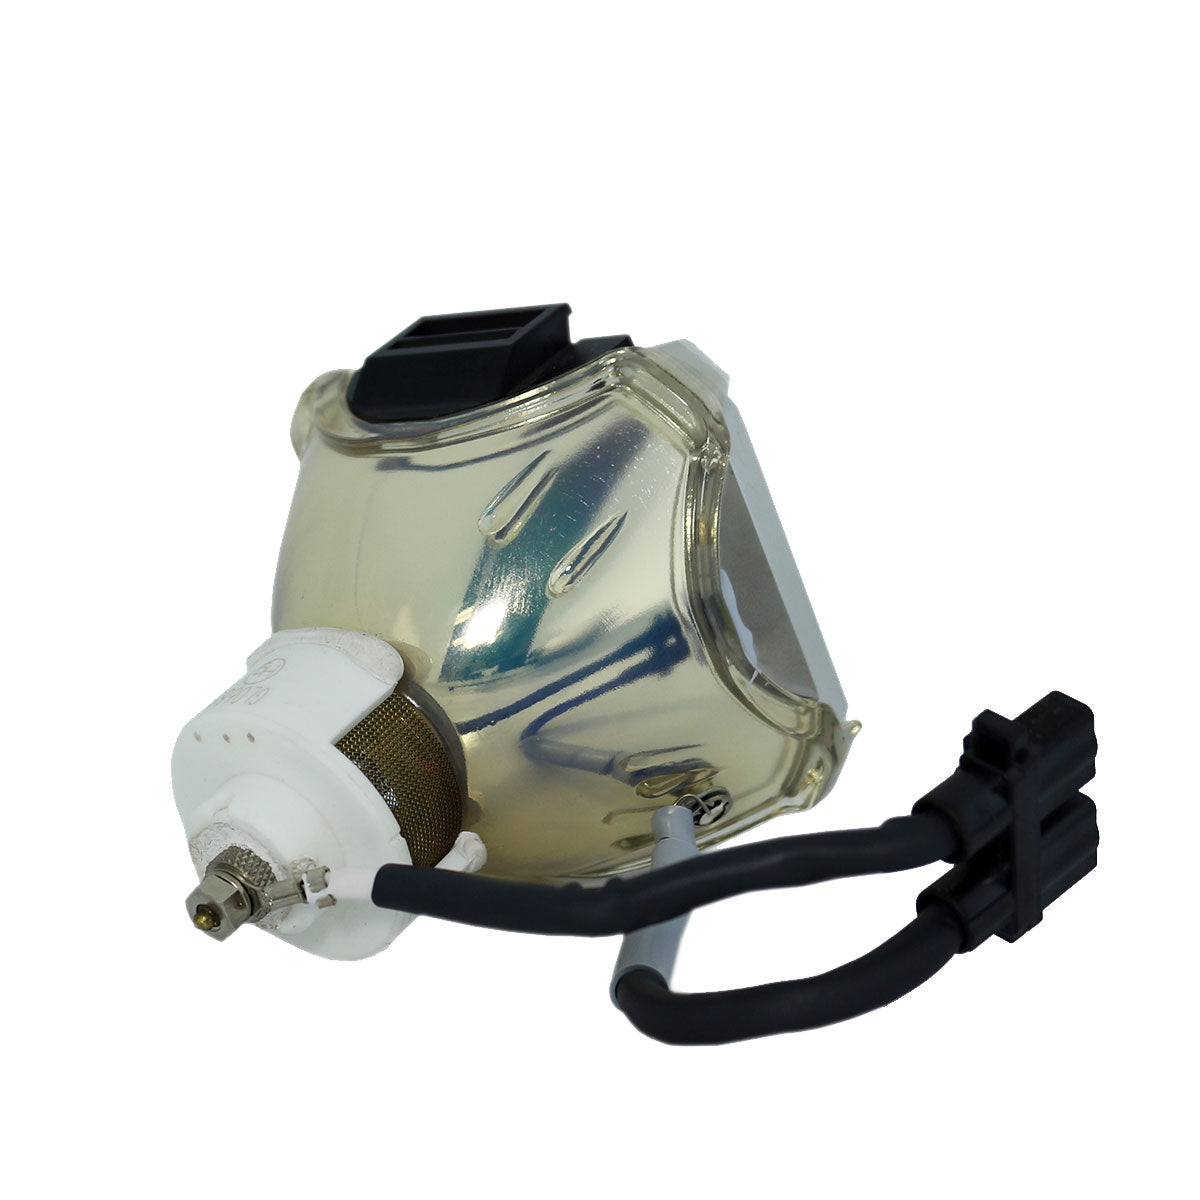 Liesegang ZU0289-04-4010 Ushio Projector Bare Lamp